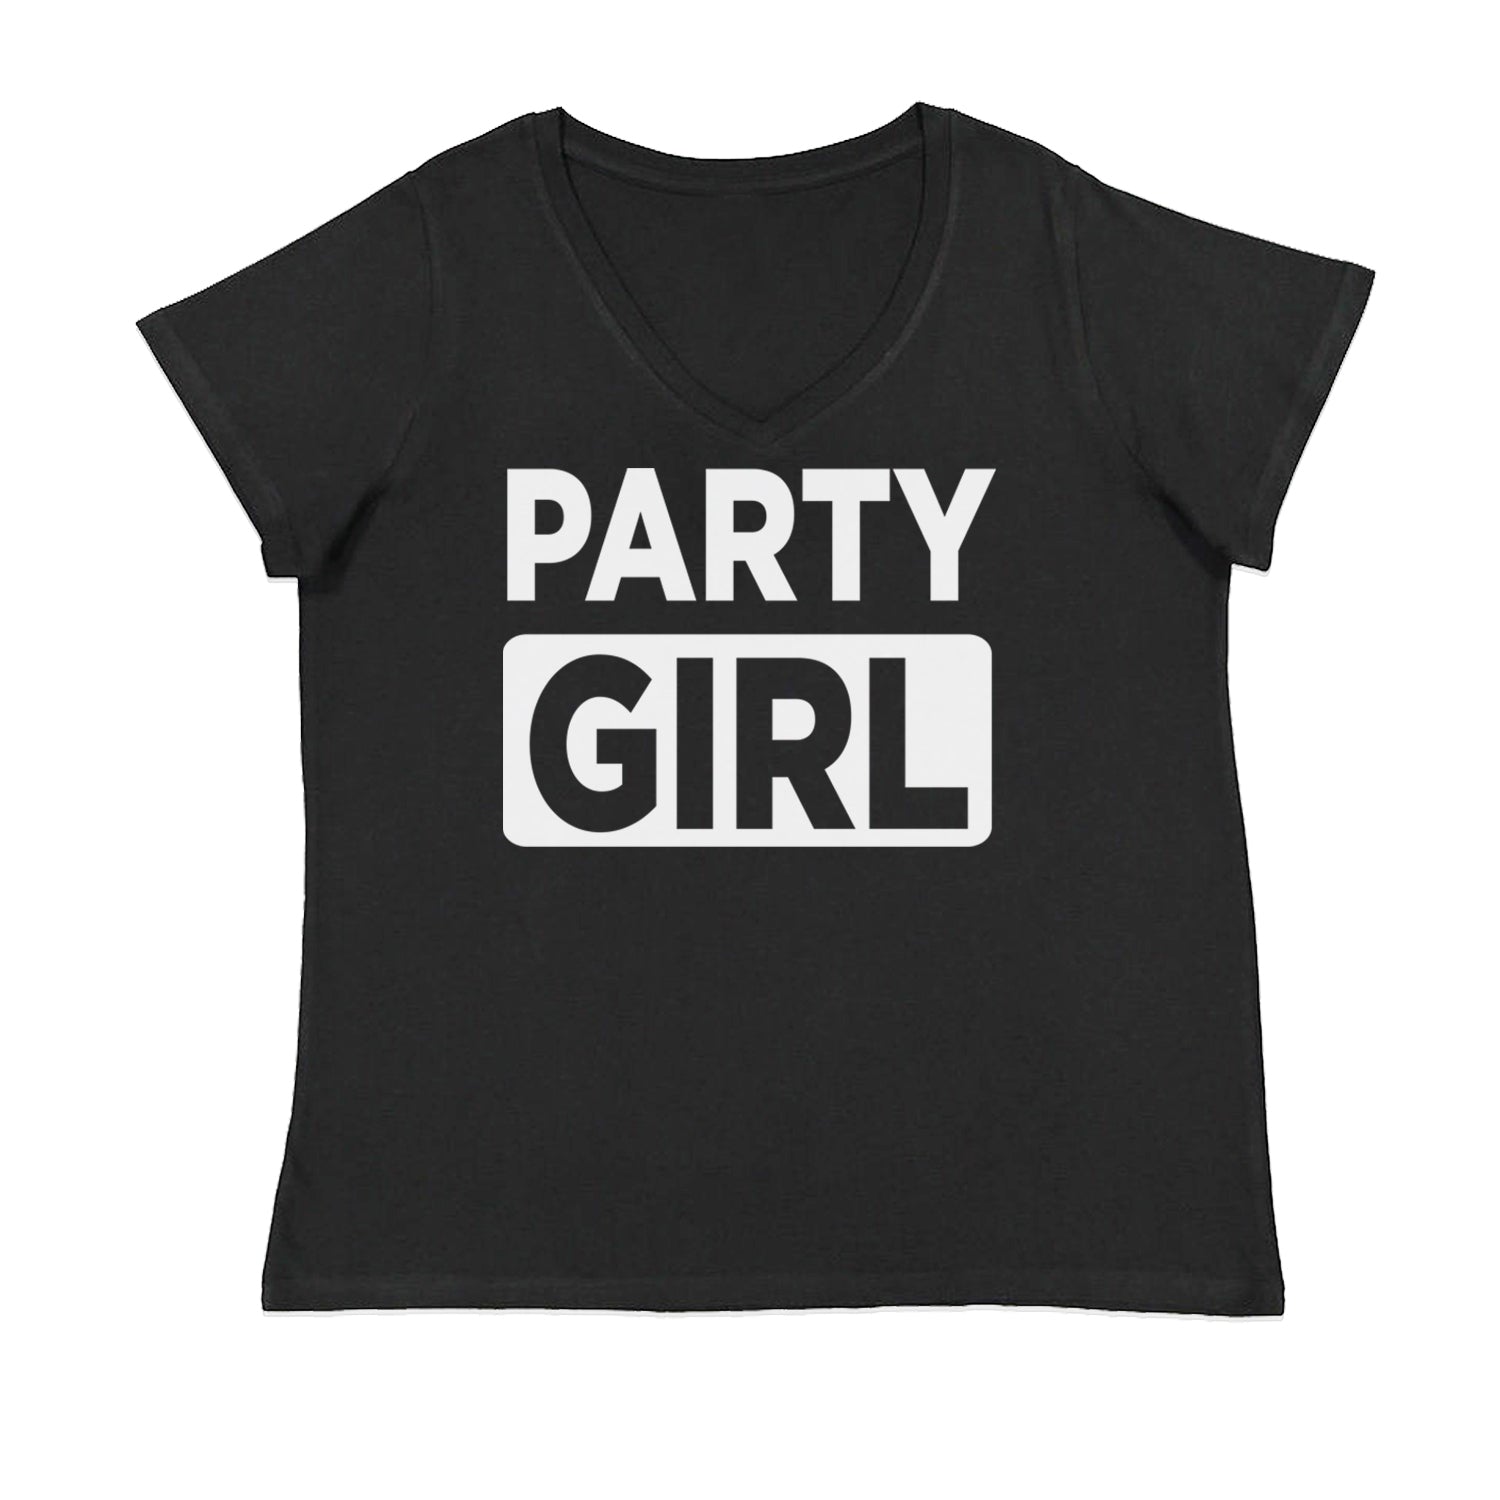 Party Girl Club Brat Womens Plus Size V-Neck T-shirt